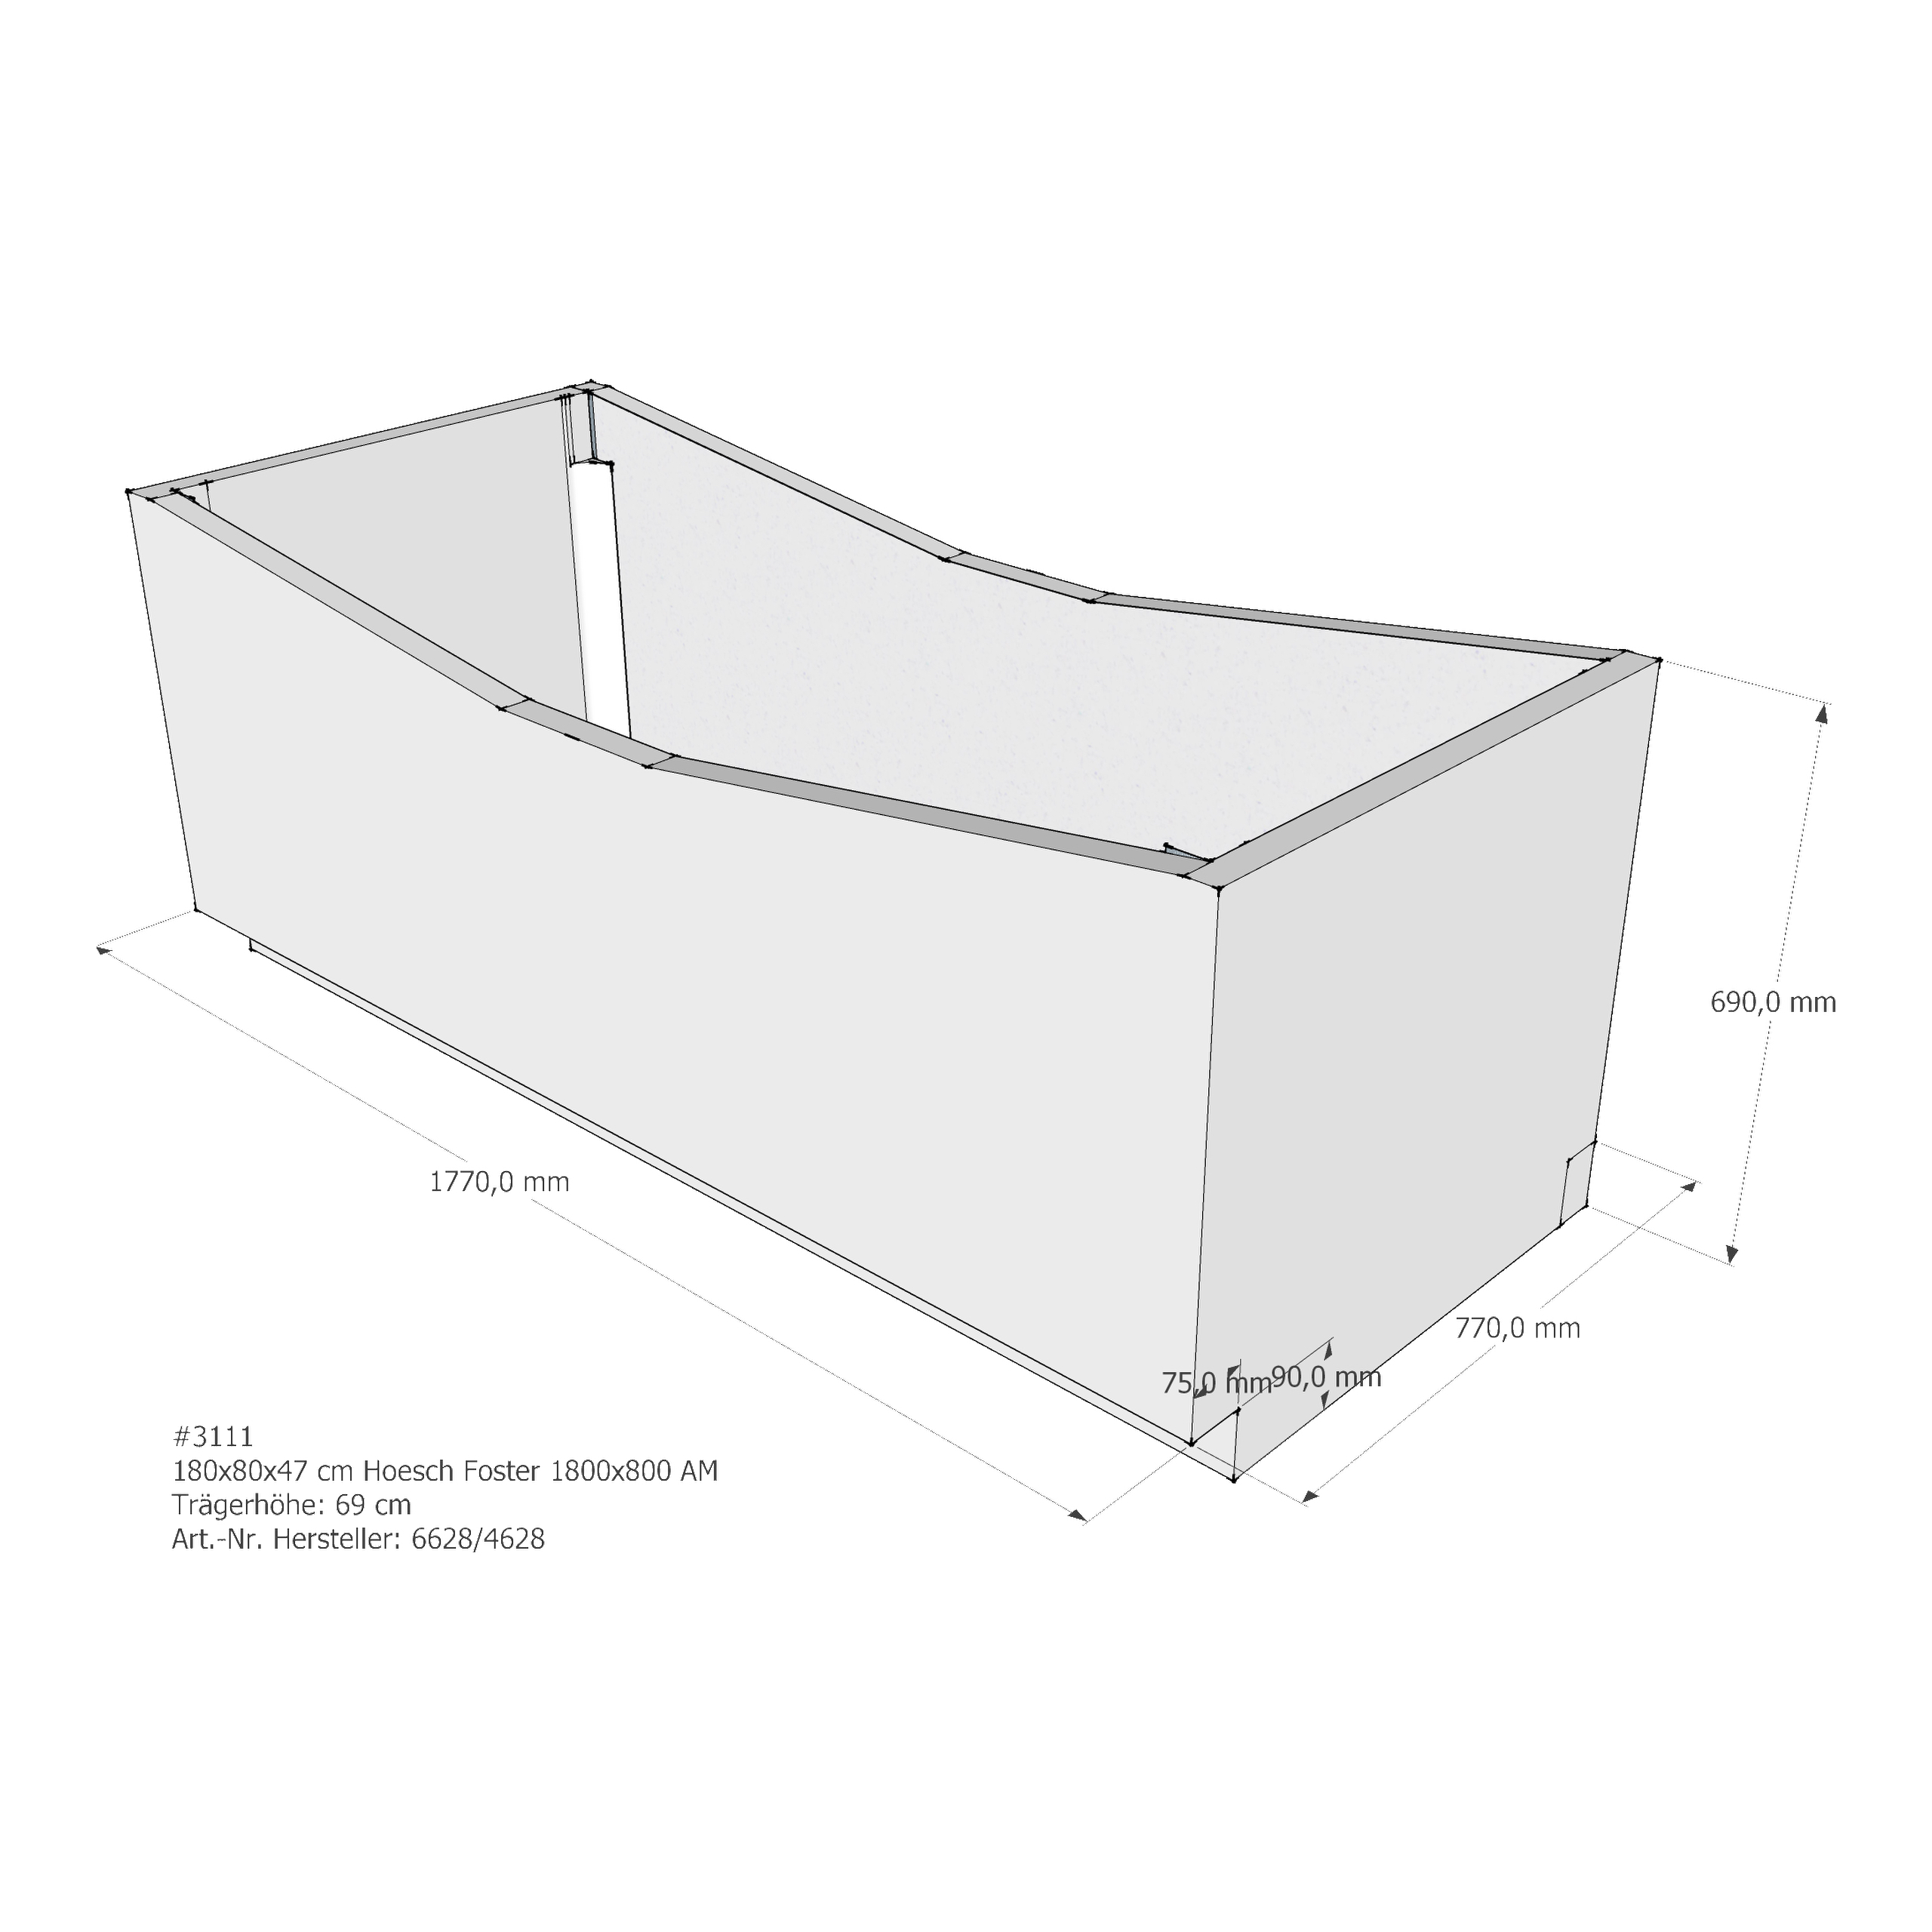 Badewannenträger für Hoesch Foster 1800x800 180 × 80 × 47 cm